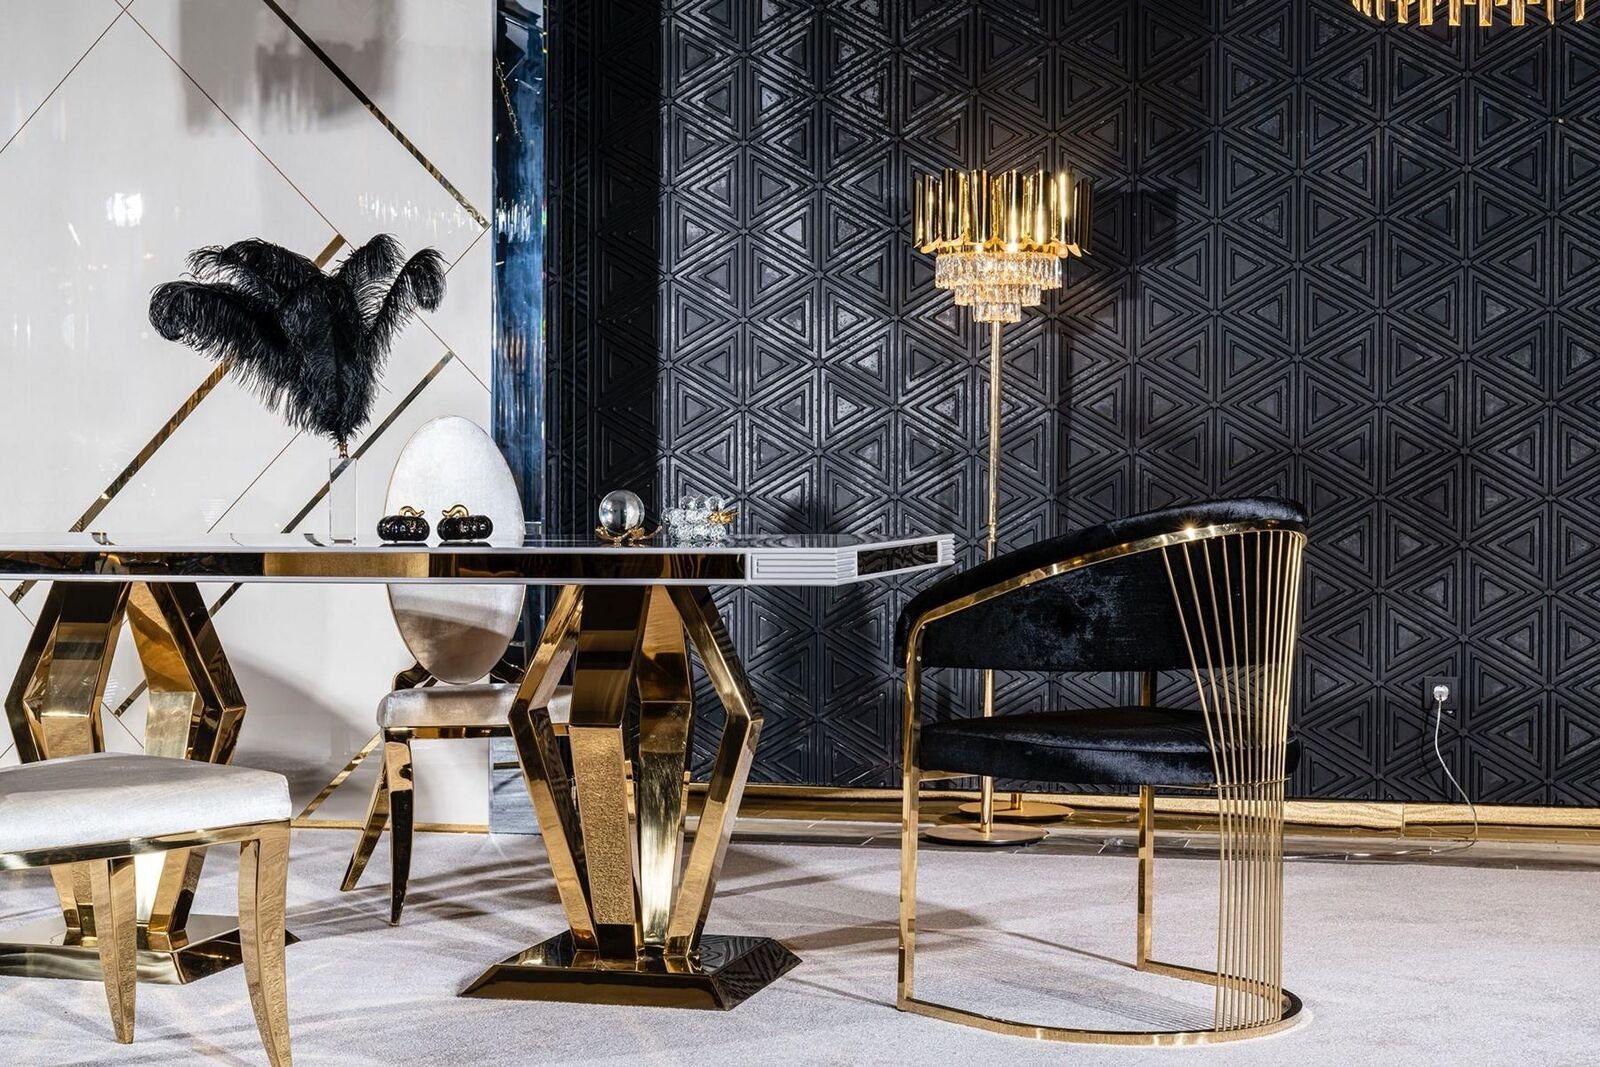 JVmoebel Stuhl Modernes Esszimmer Stuhl Luxus Designer Edelstahl Elemente Textil Neu, Made in Europa